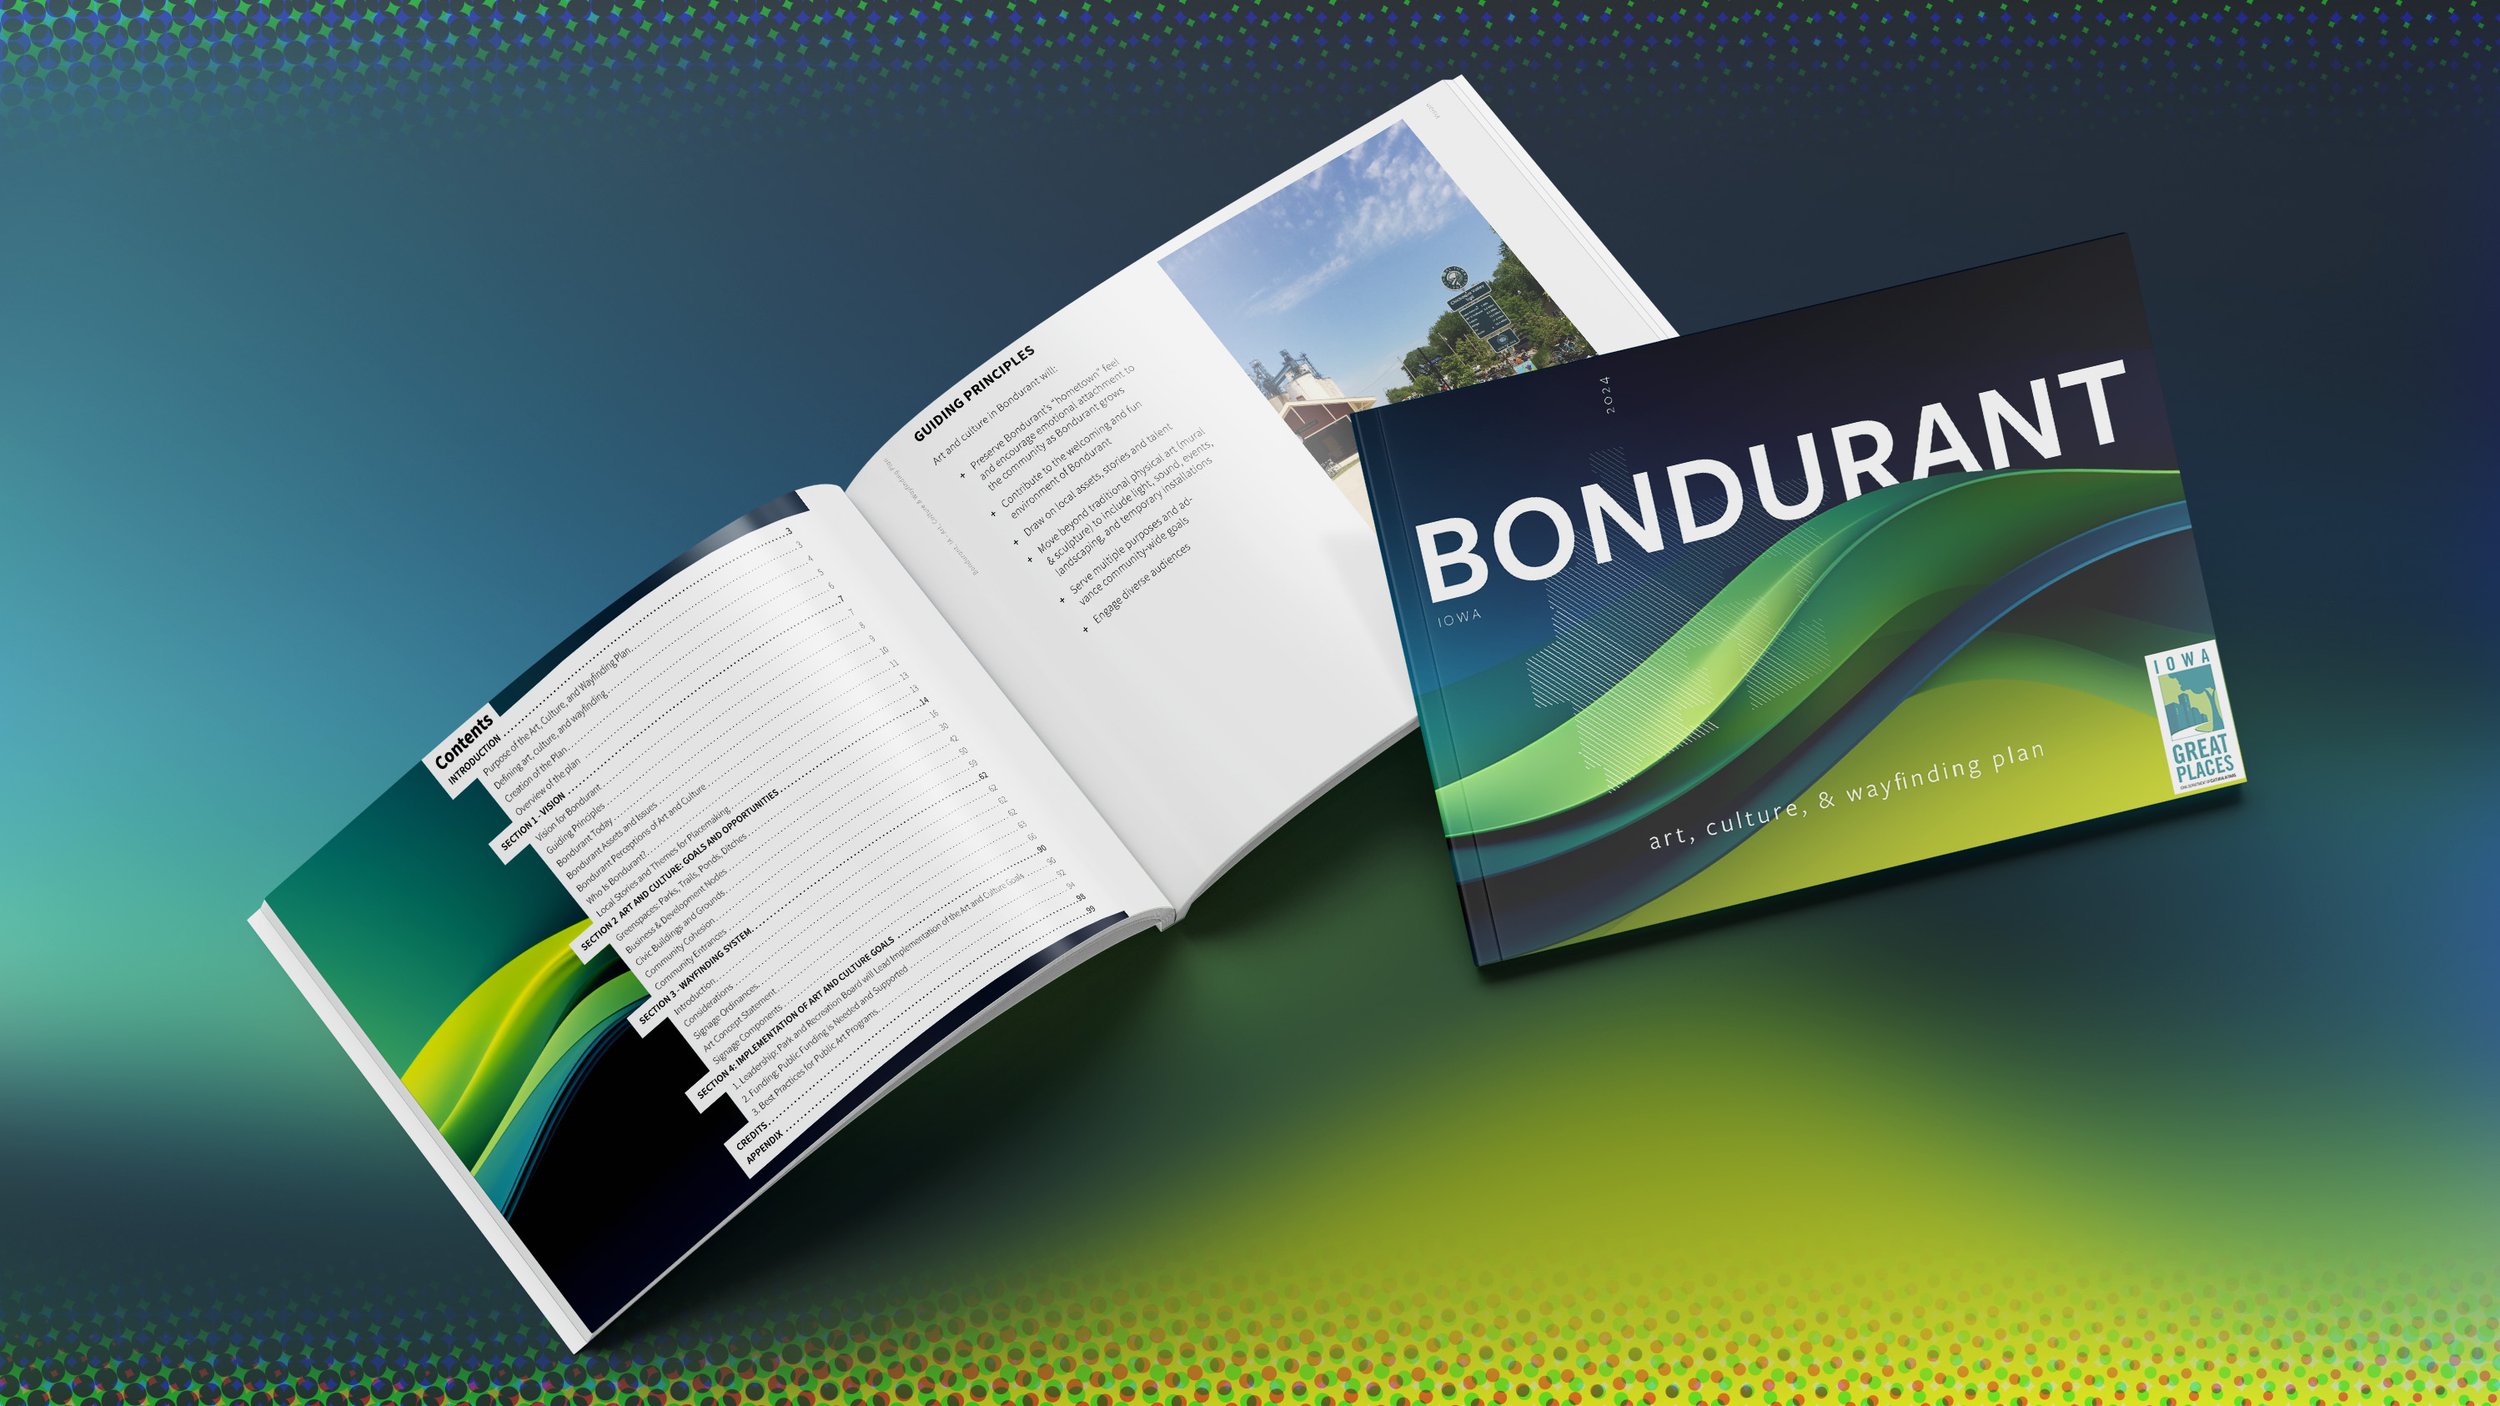 Bondurant, IA Art, Culture, & Wayfinding Plan